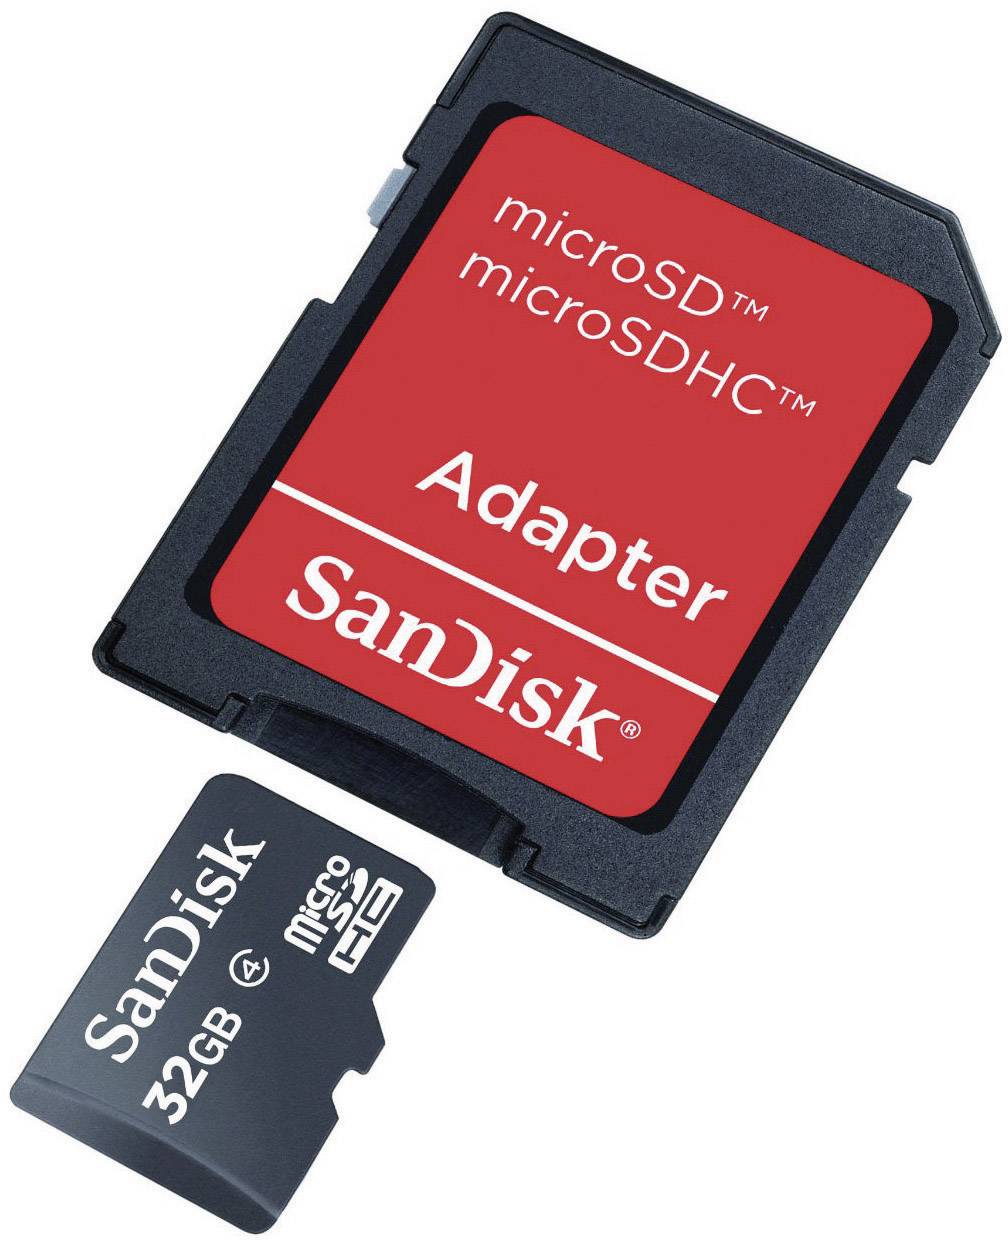 Sandisk microsdhc. SANDISK MICROSD 8gb. MICROSD SANDISK 32gb флешка. Карта памяти SANDISK MICROSDHC Card class 4 4gb + SD Adapter. SANDISK 32gb MICROSD c4 with Adaptor (SDSDQM-032g-b35a).